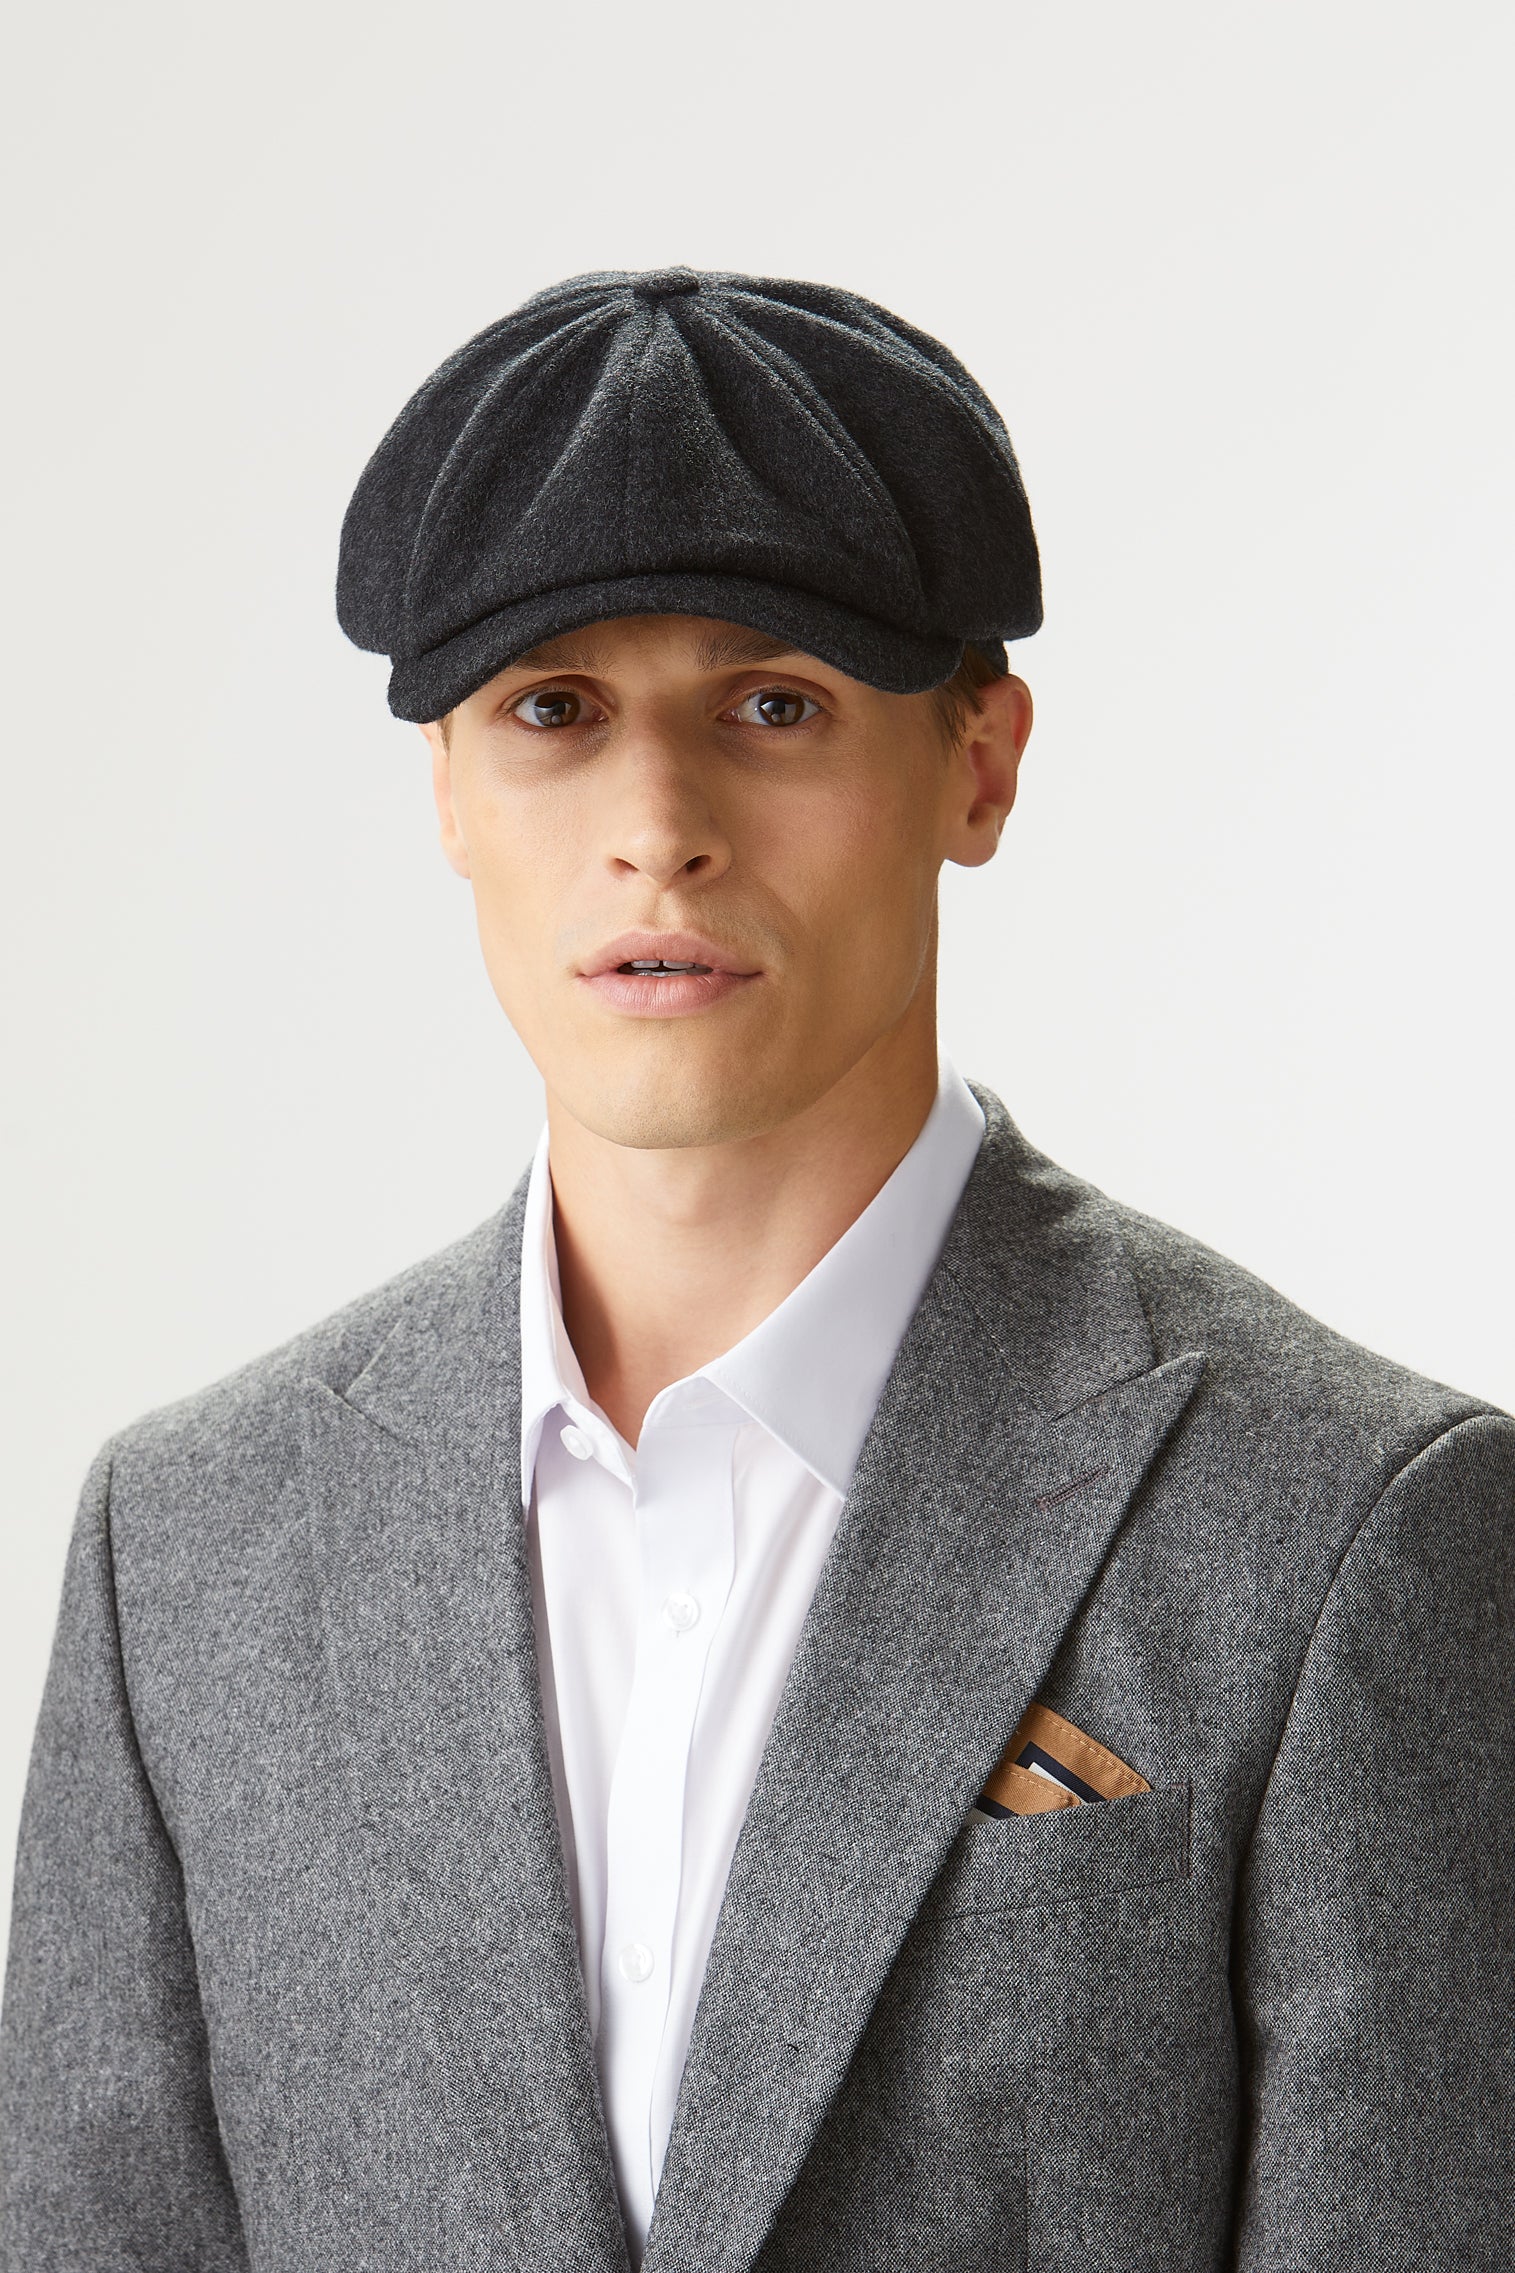 Escorial Wool Newsboy Cap - Products - Lock & Co. Hatters London UK